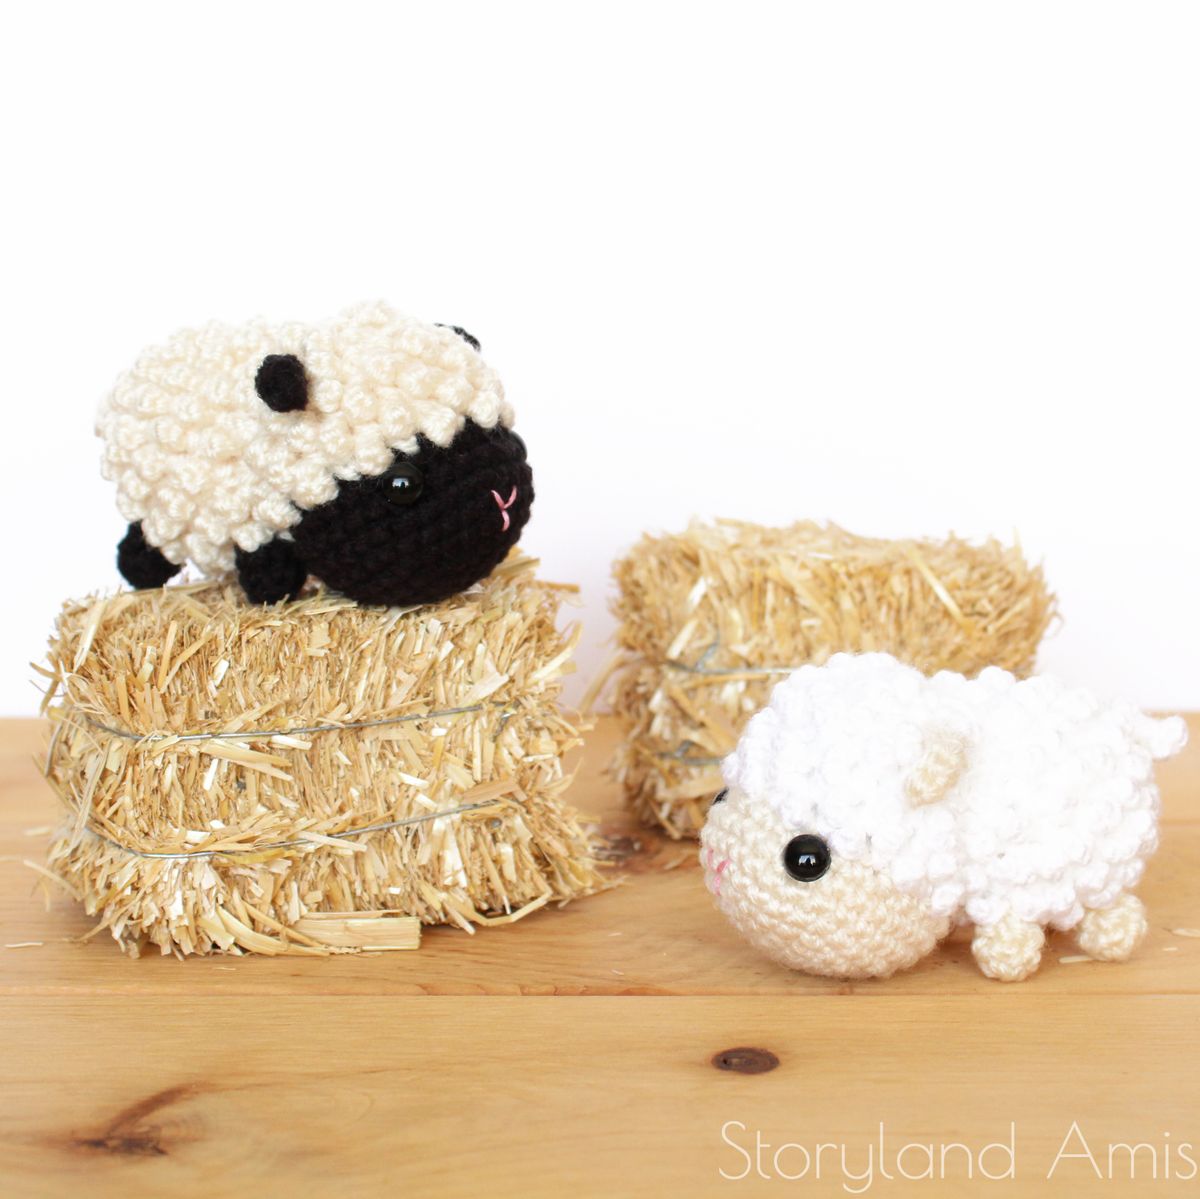 Wool-Free Sheep Crochet Kit